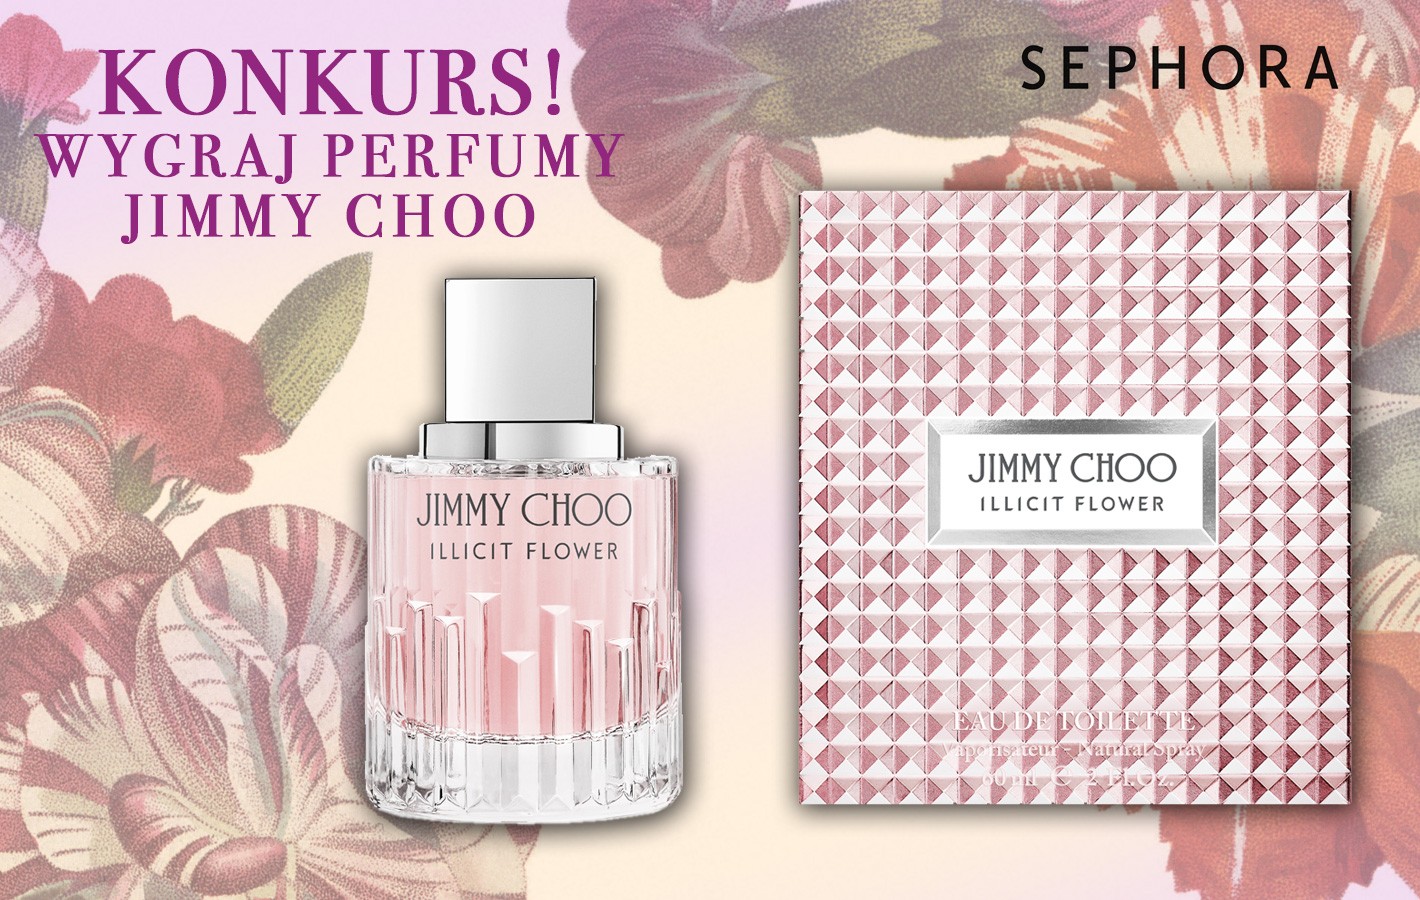 Regulamin konkursu “Wygraj perfumy Jimmy Choo, Illicit Flower”